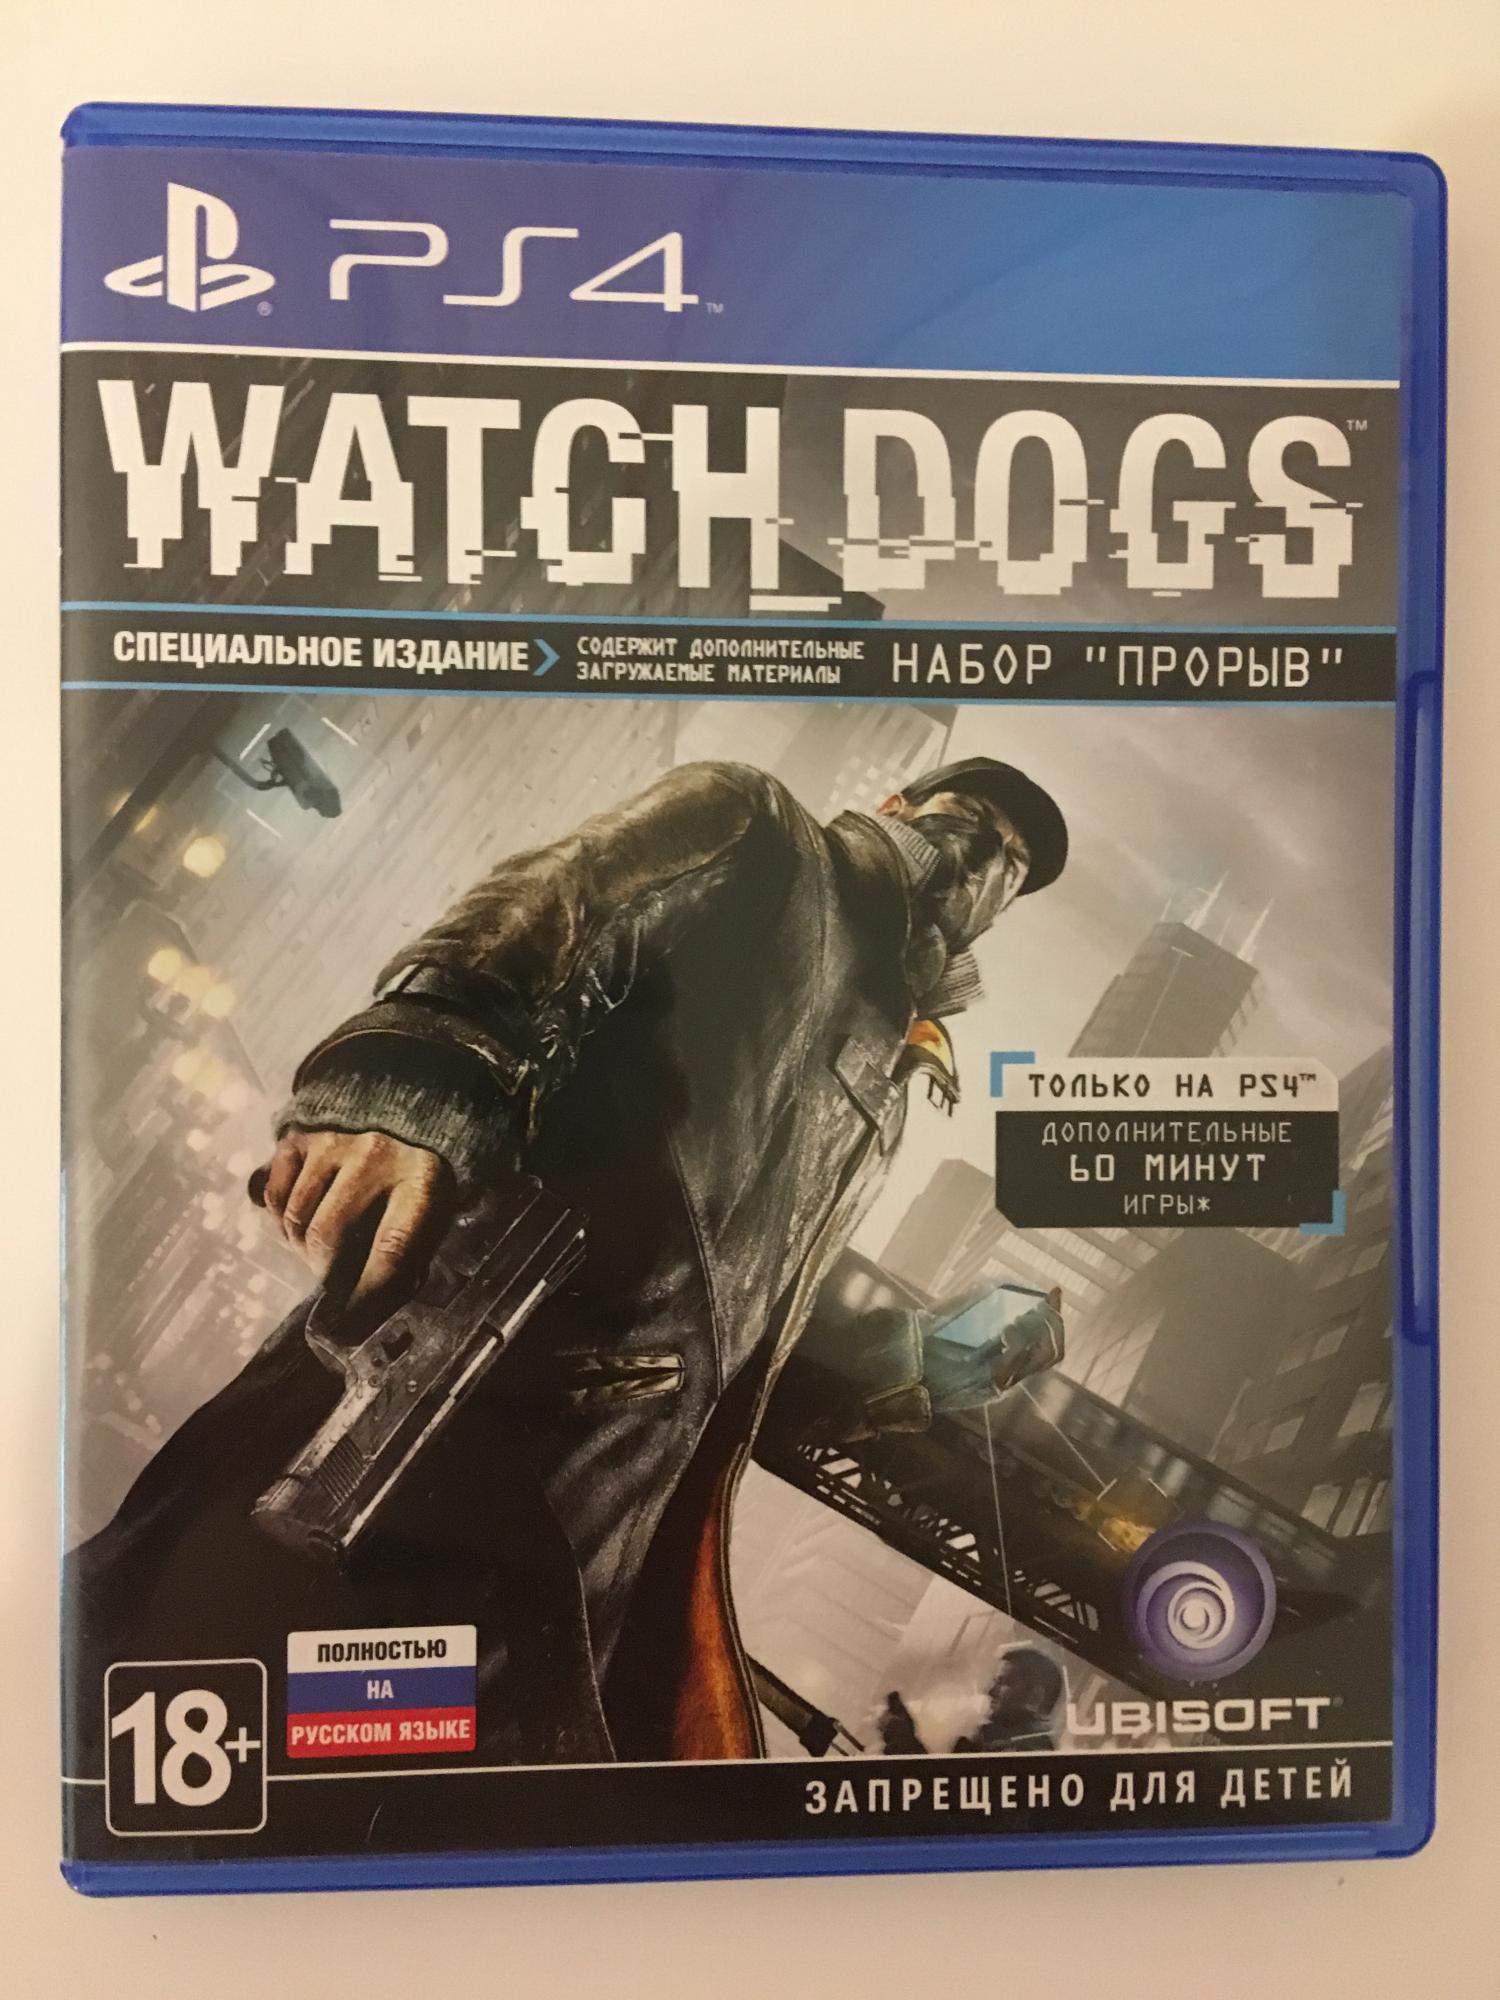 89030001023 Watch Dogs PS4 в Москве